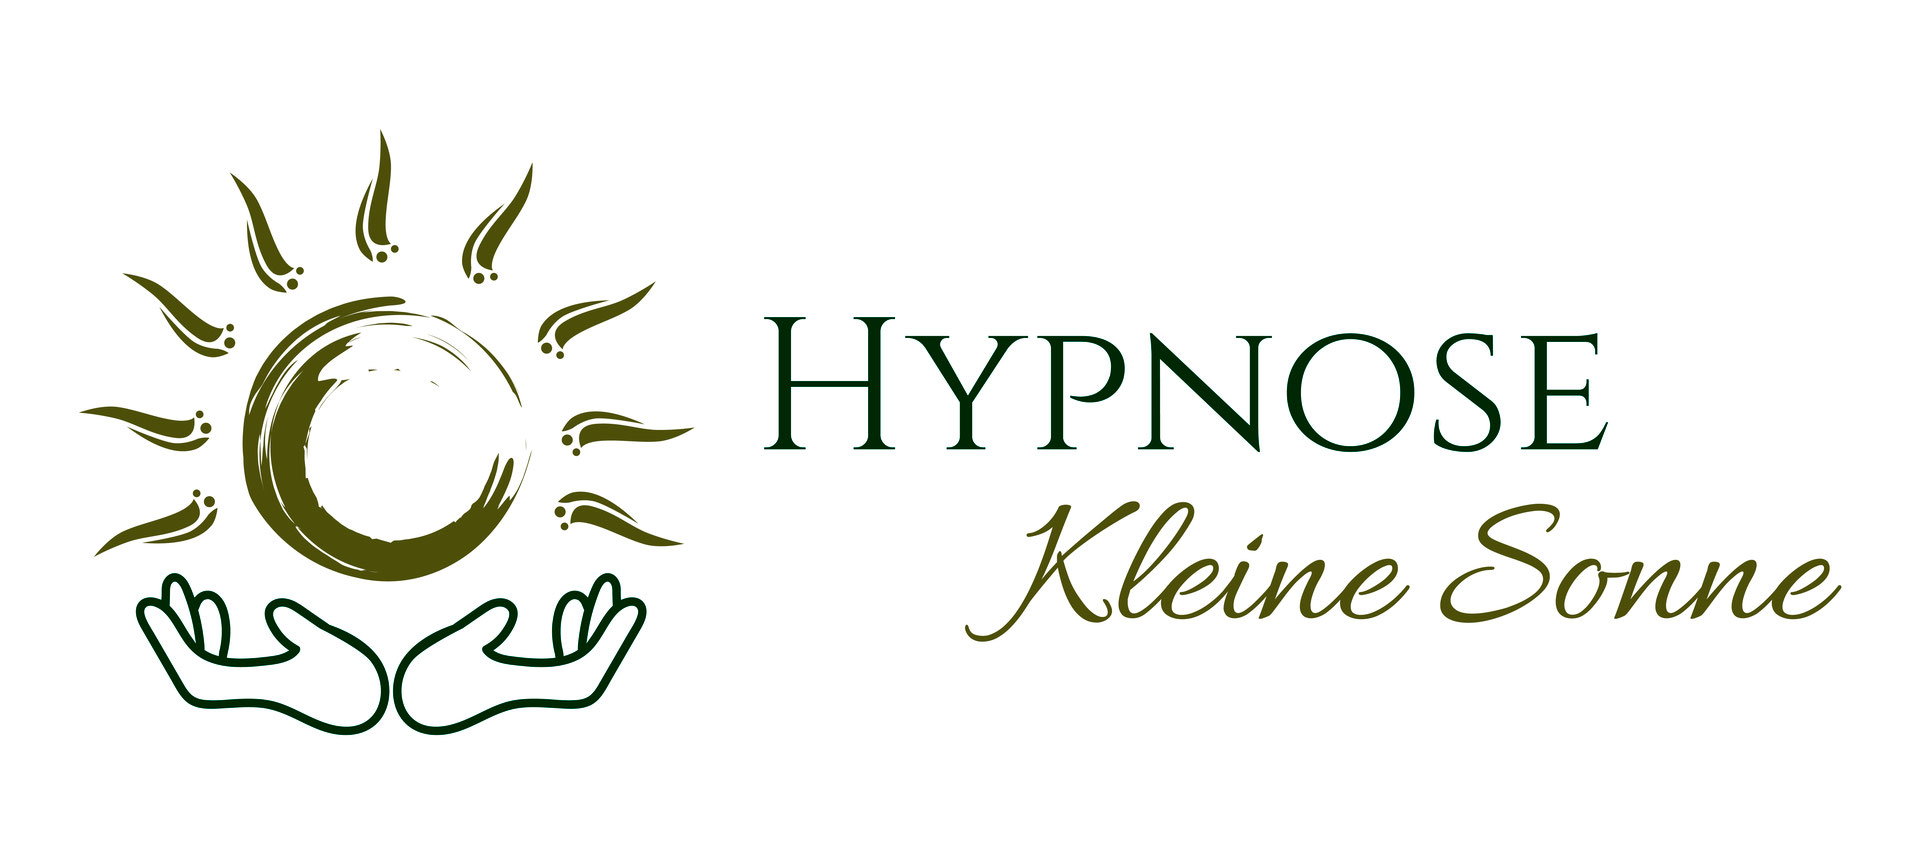 (c) Hypnose-kleinesonne.de